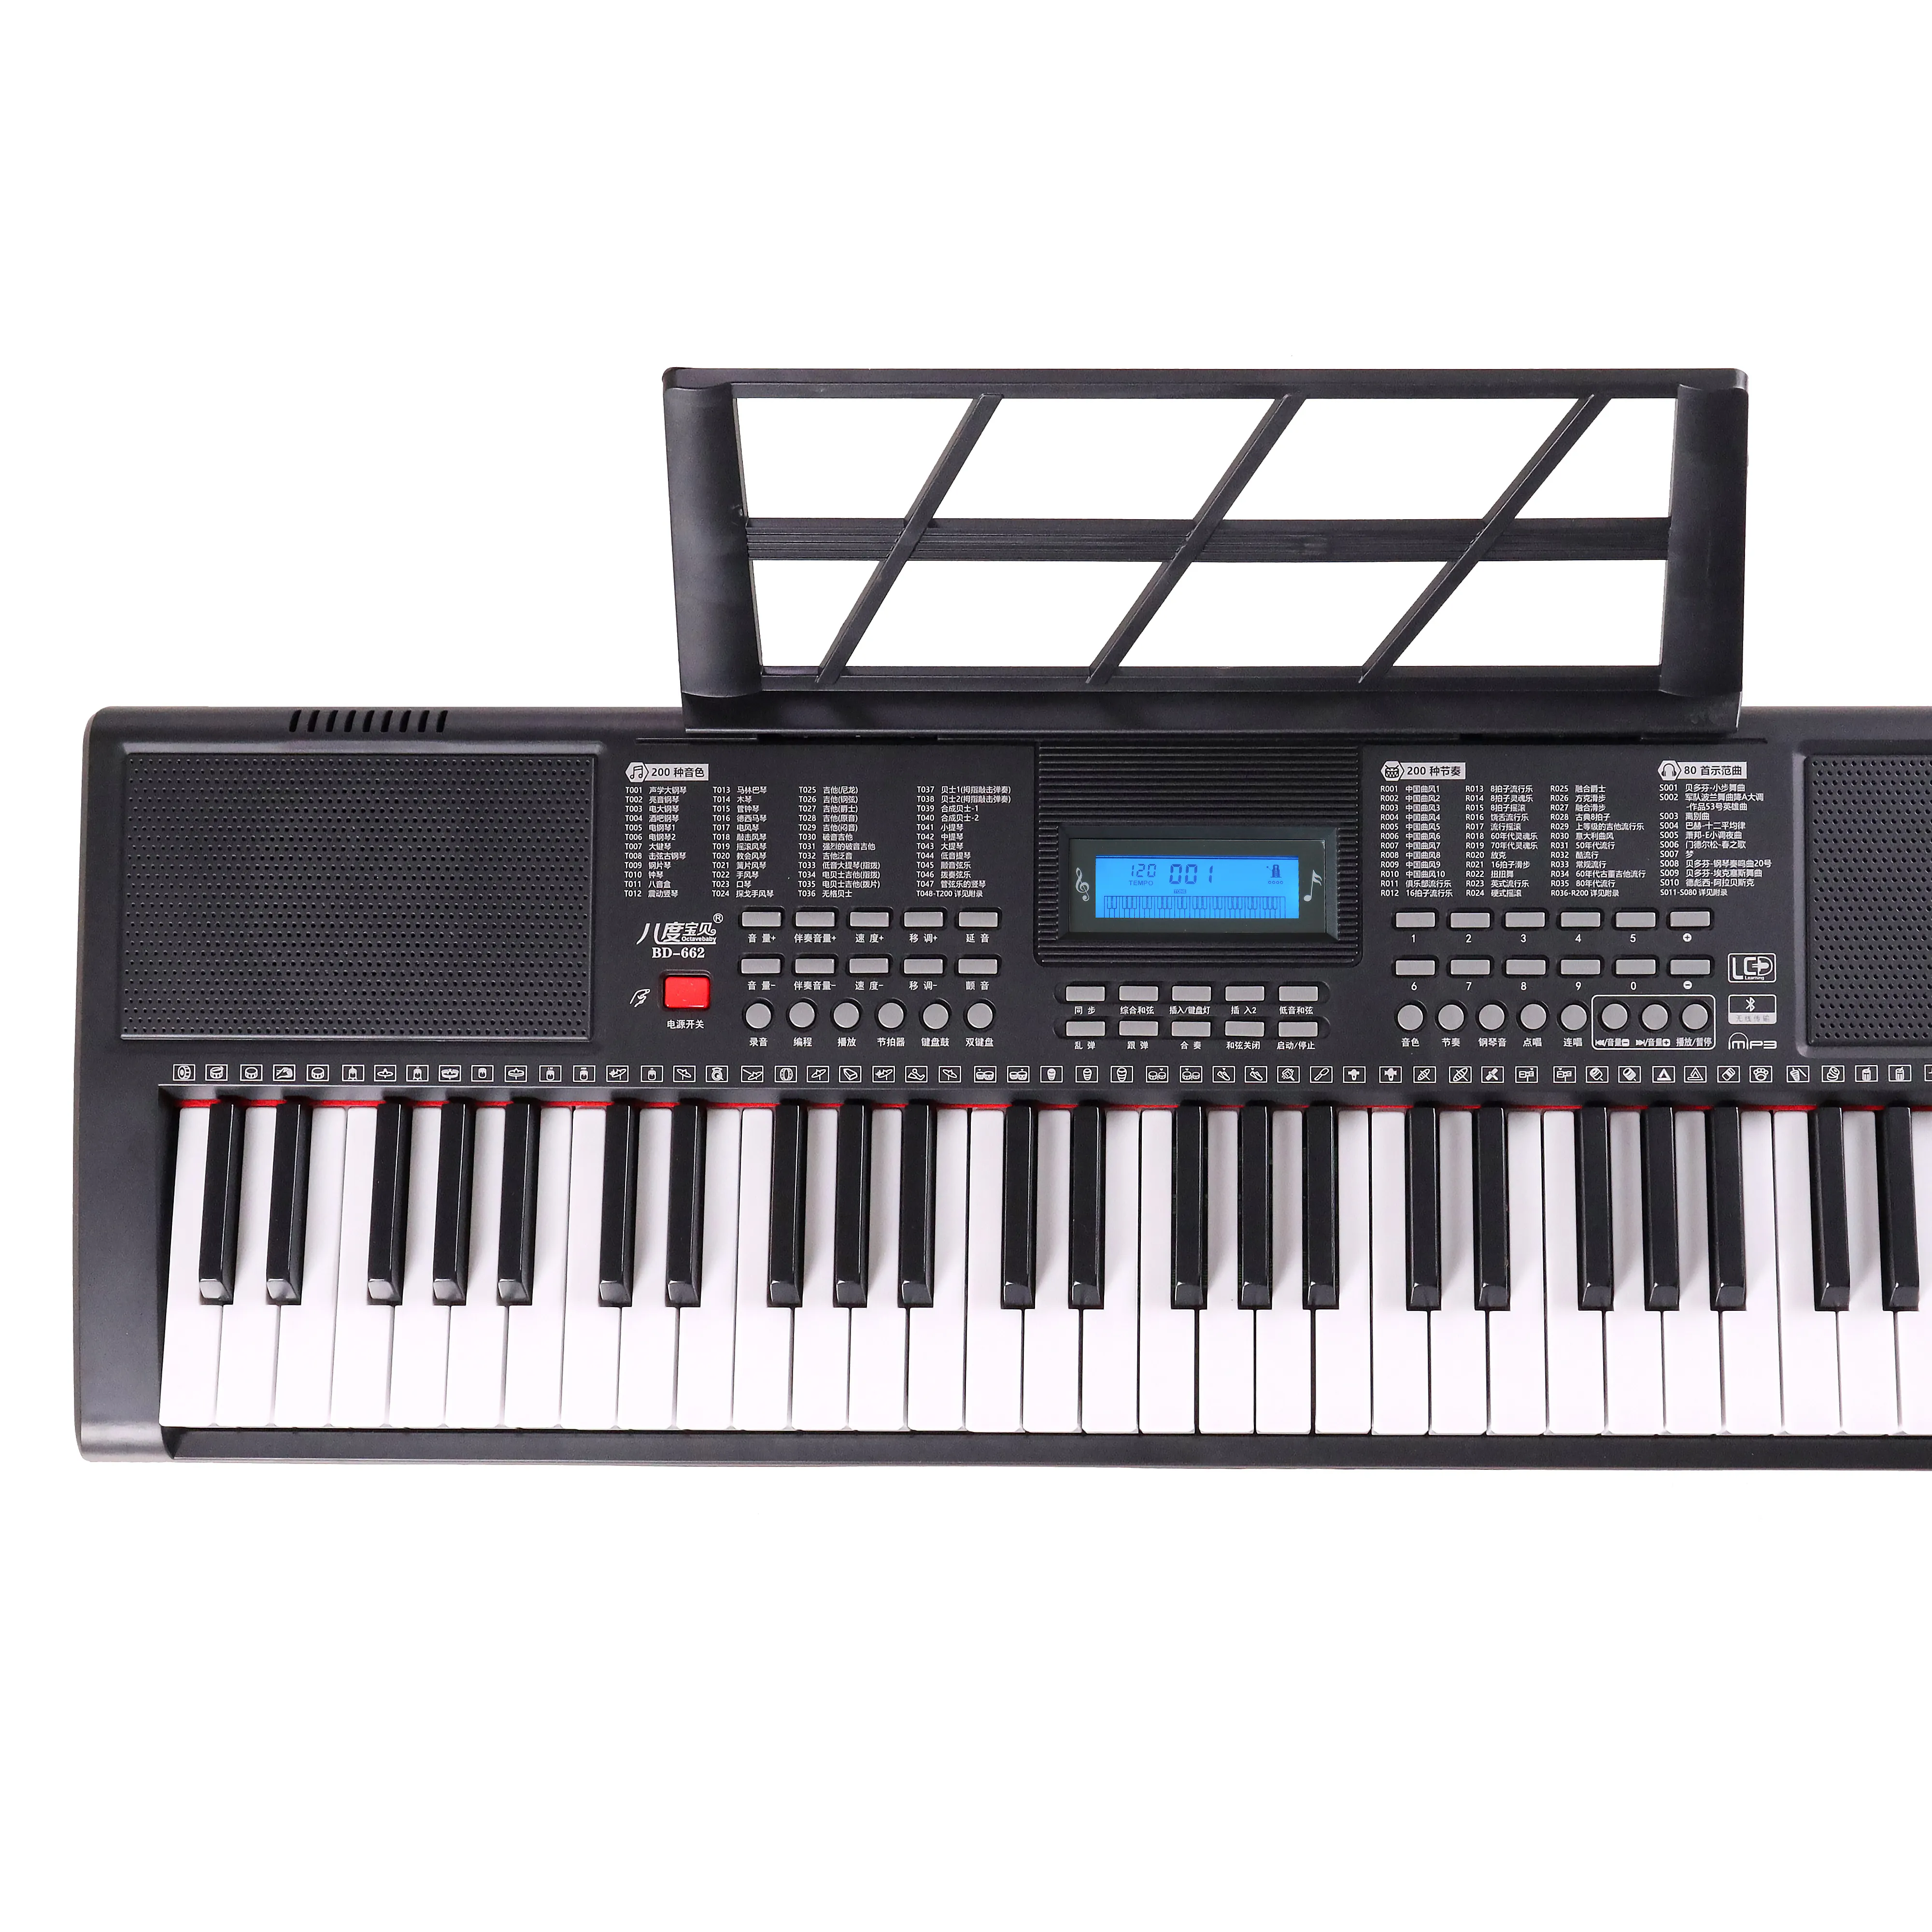 High Quality MP3 Teaching Music Instruments Semi-professional Piano Organ Keyboard With 61 Keys